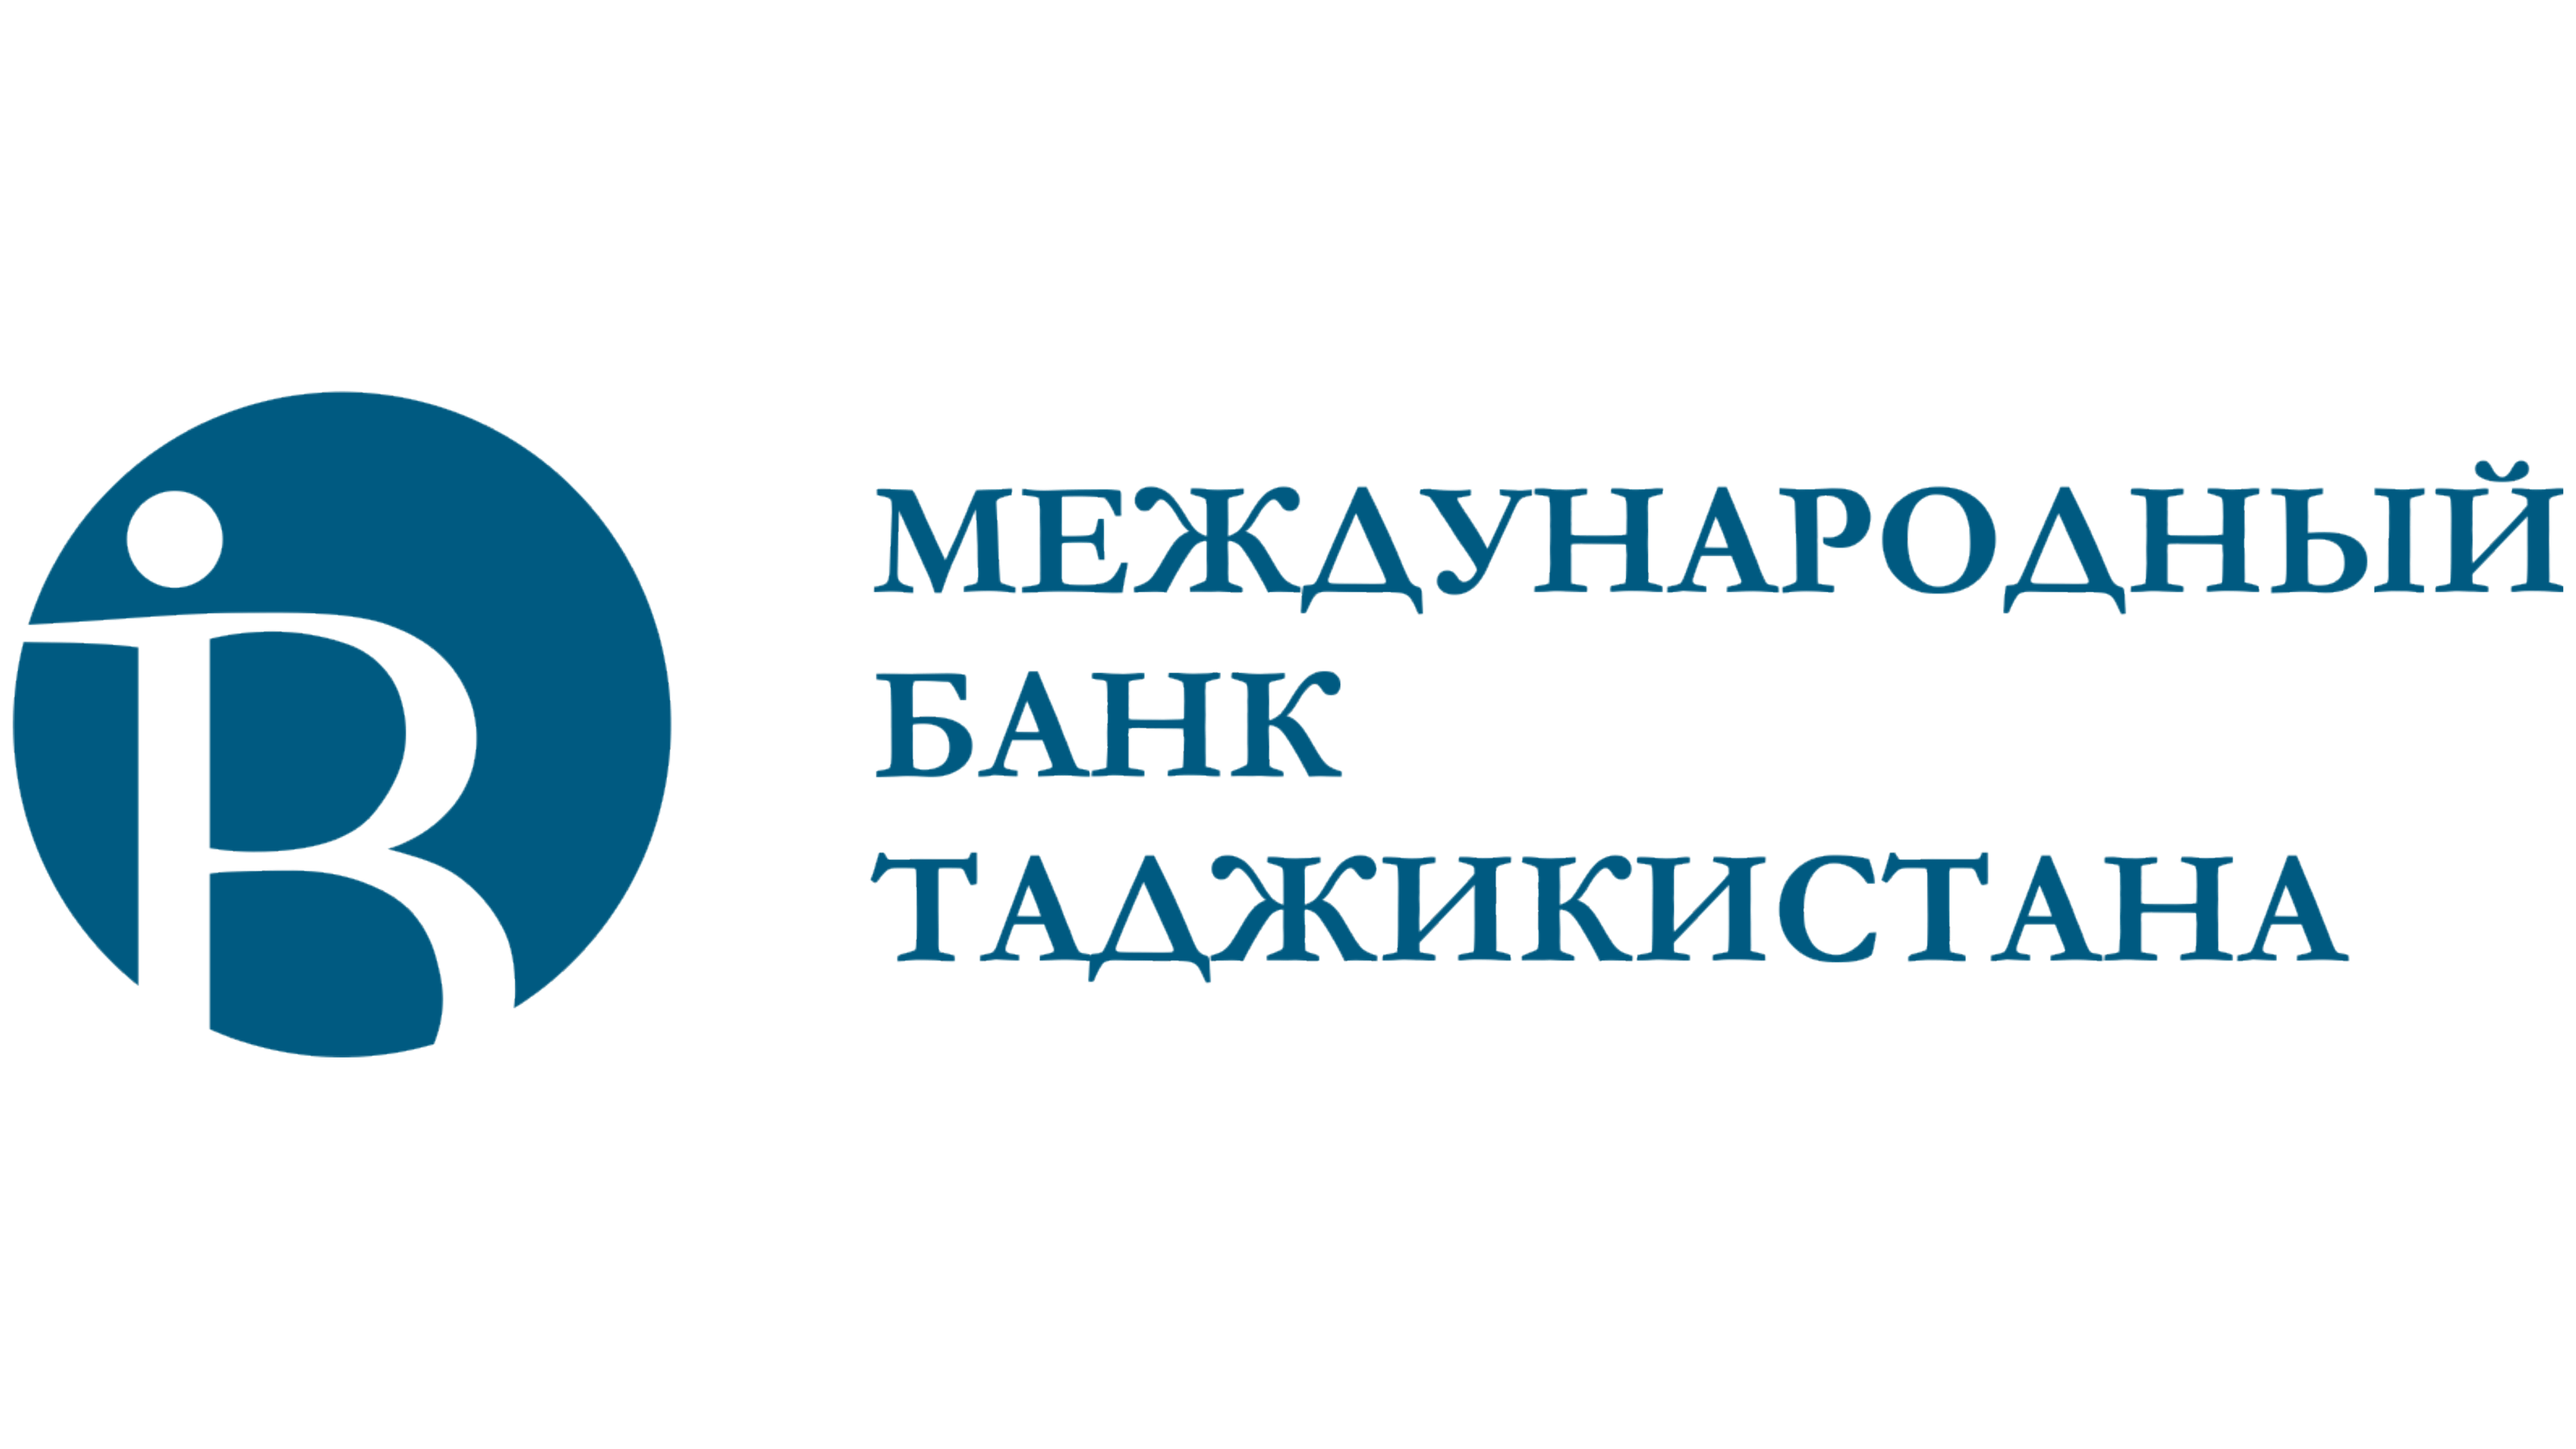 Ibt банк таджикистана. Международный таджикский банк. Международный банк Таджикистана карта. Логотип международного банка Таджикистана.